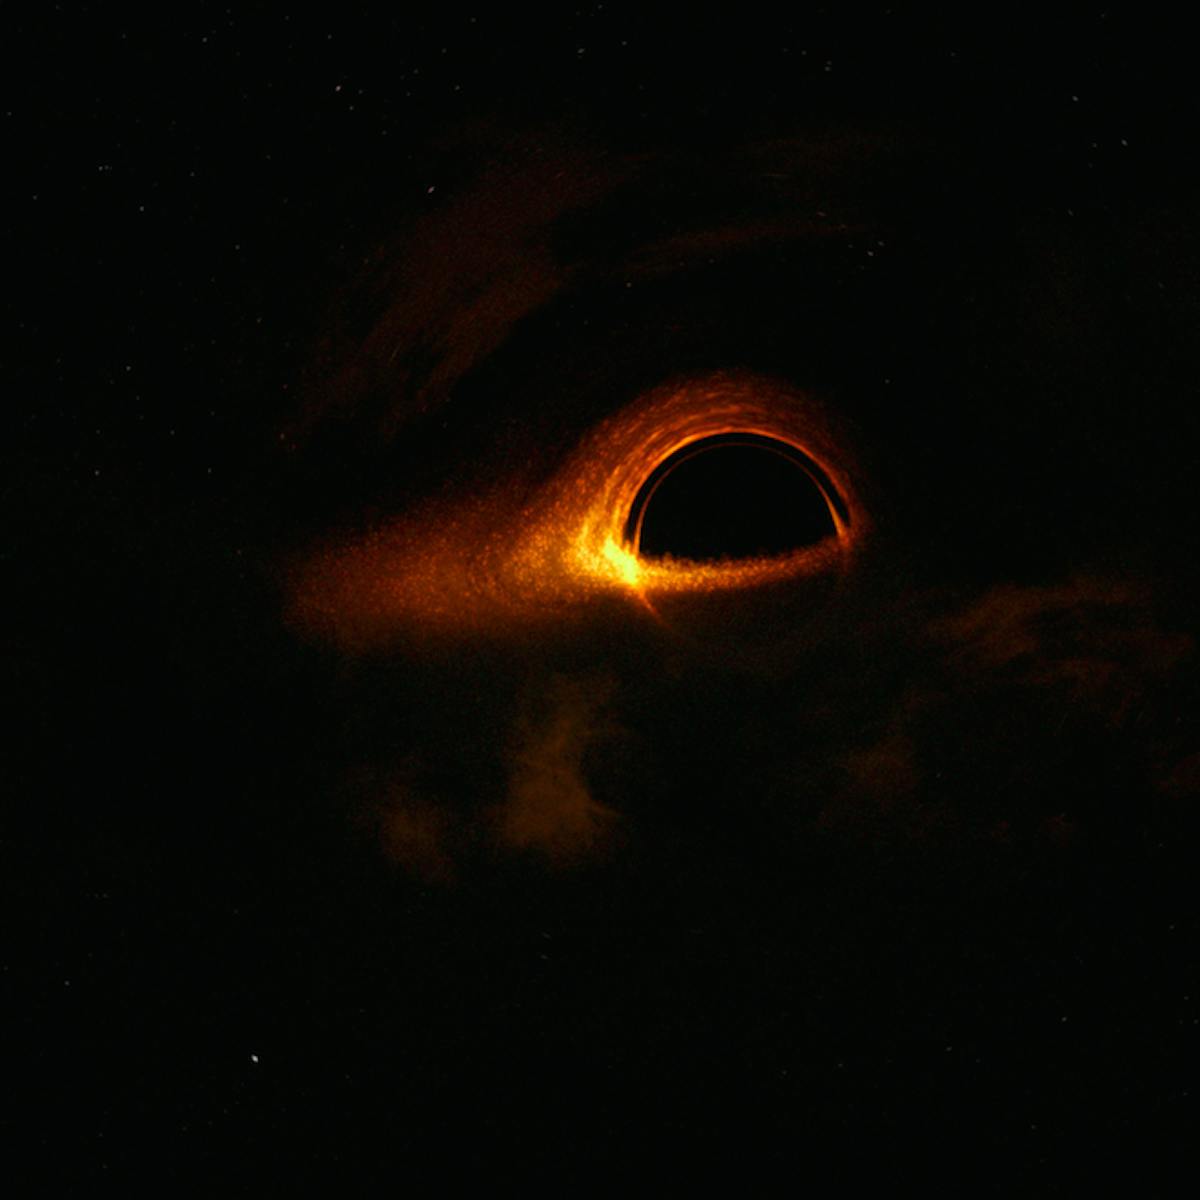 astrophysicist-aurlien-barrau-phd-helped-design-the-black-holes-in-the-film-this-one-looks-rem.png